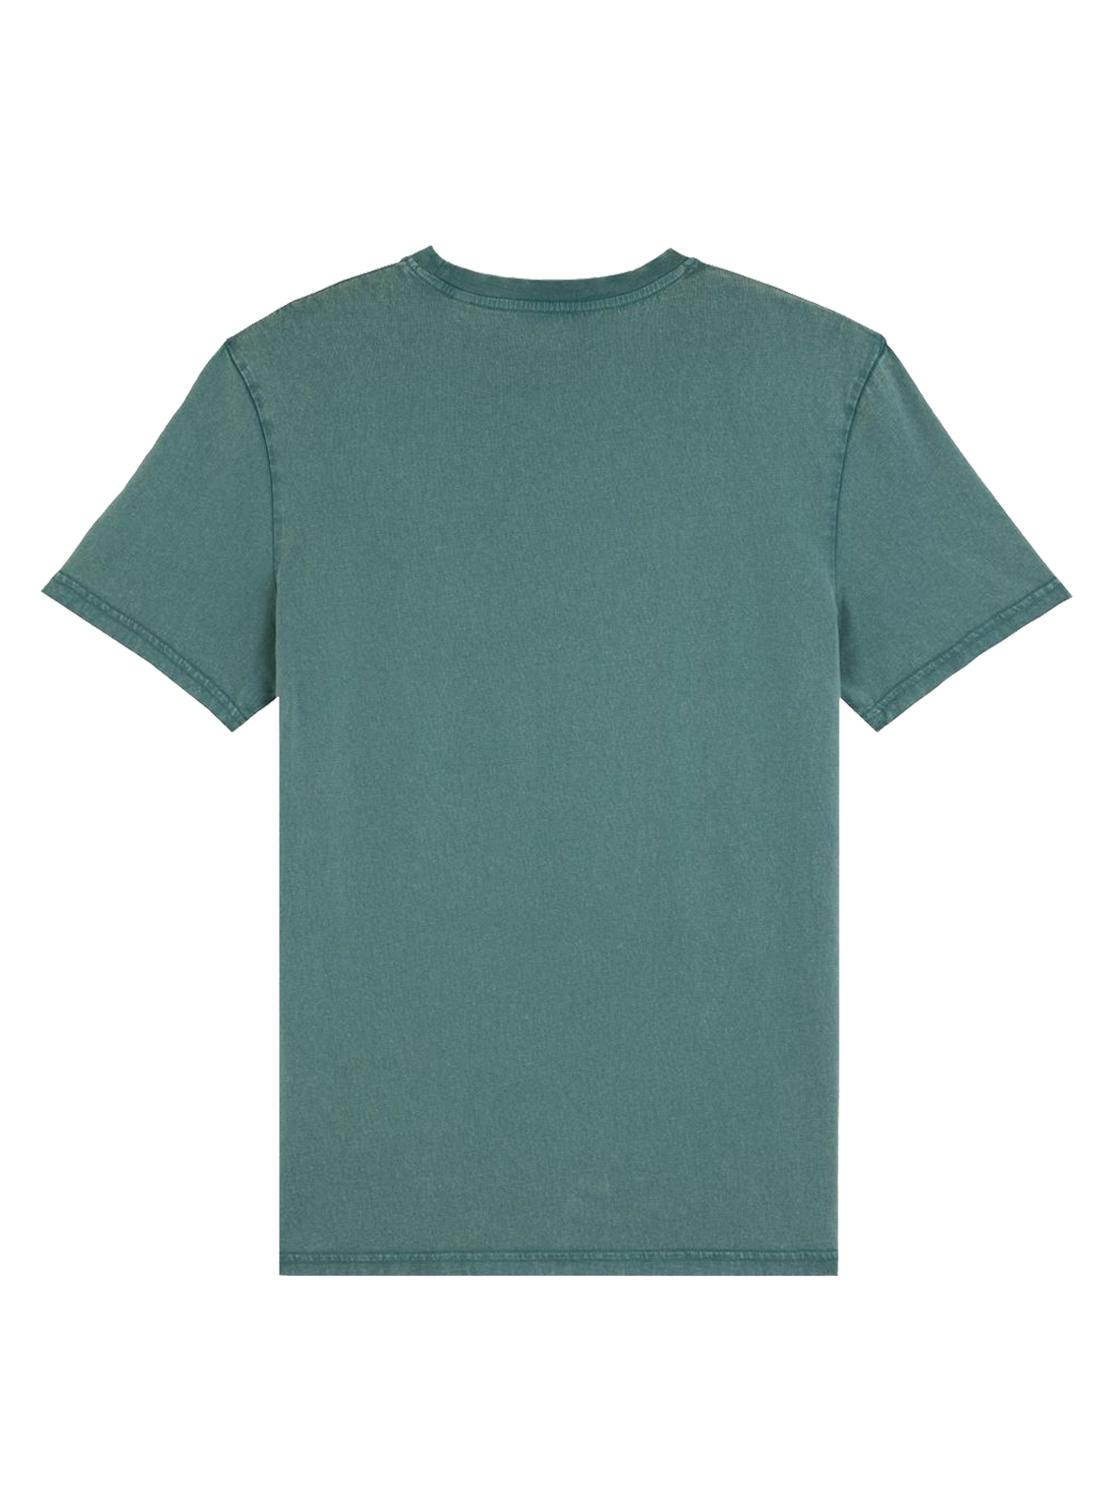 T-Shirt Klout Basica Turquesa tinto Uomo e Donna